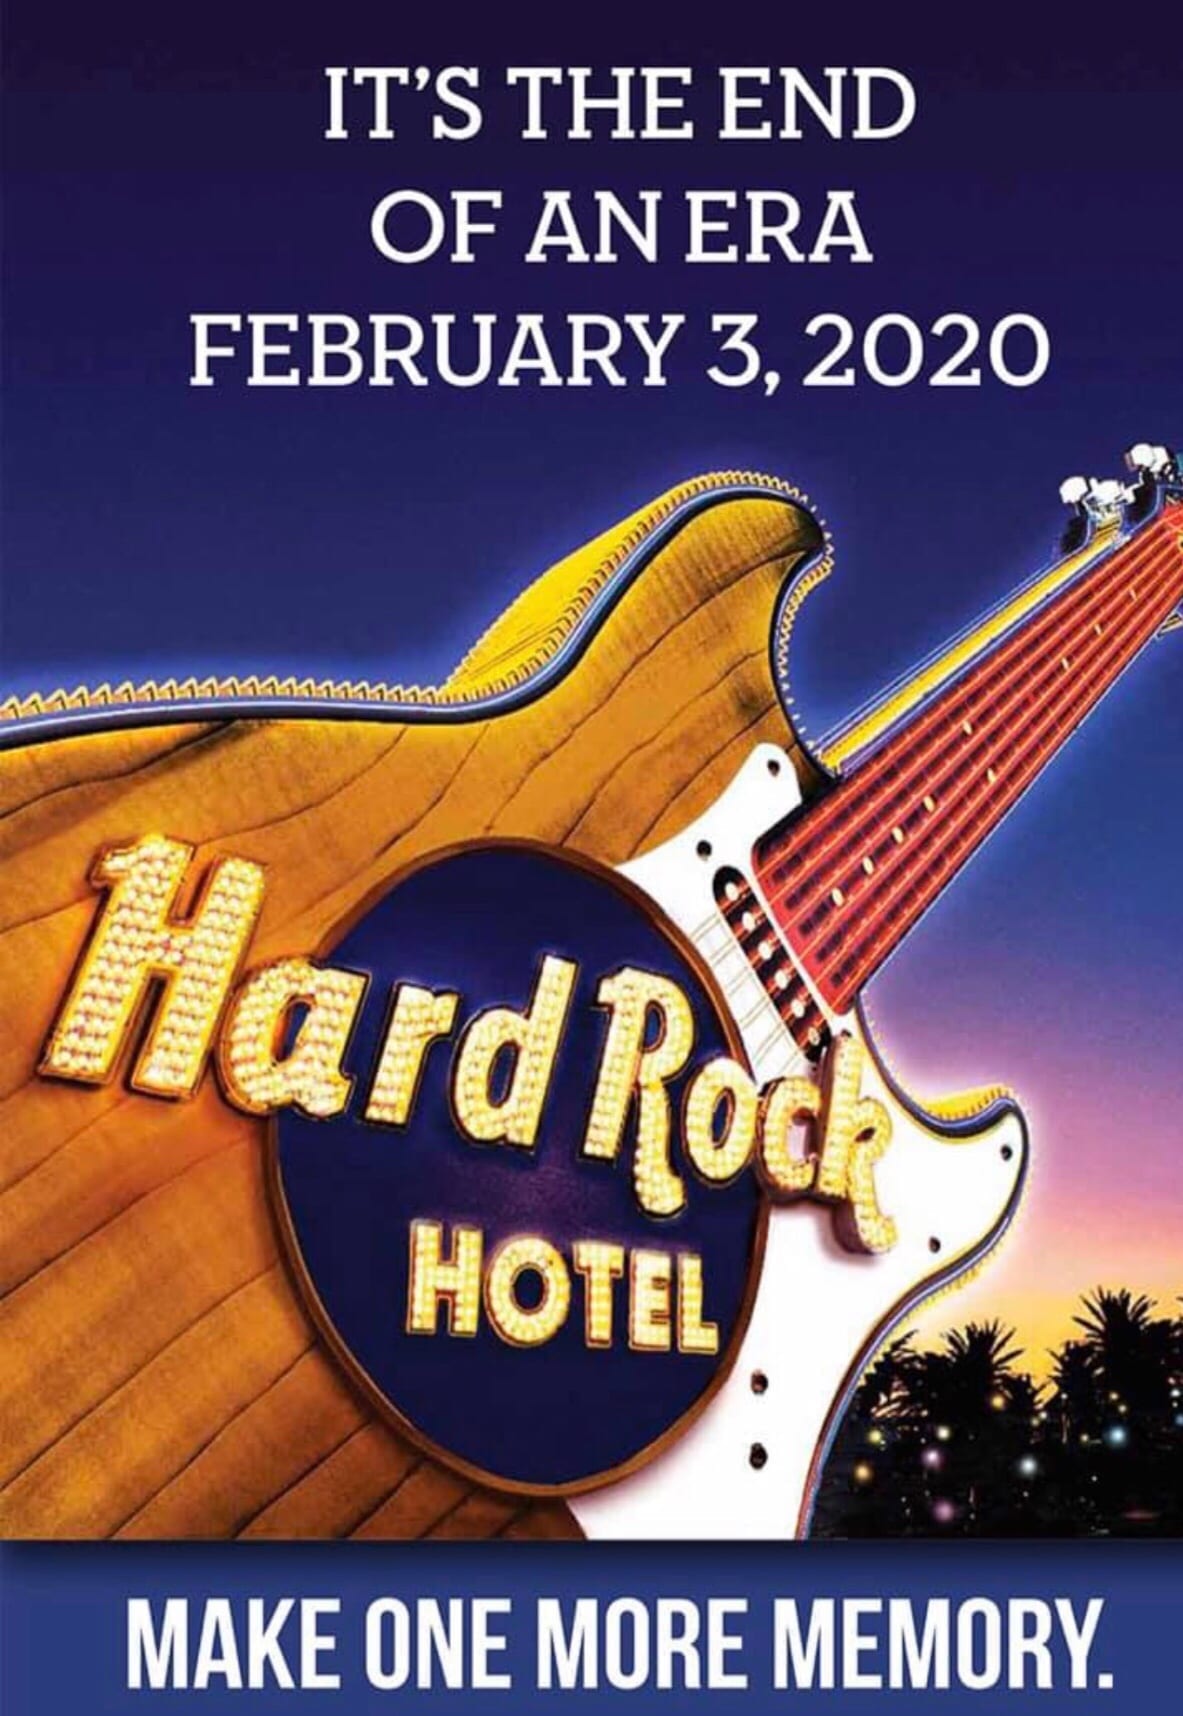 Hard Rock Hotel & Casino - The Last Great Party Weekend